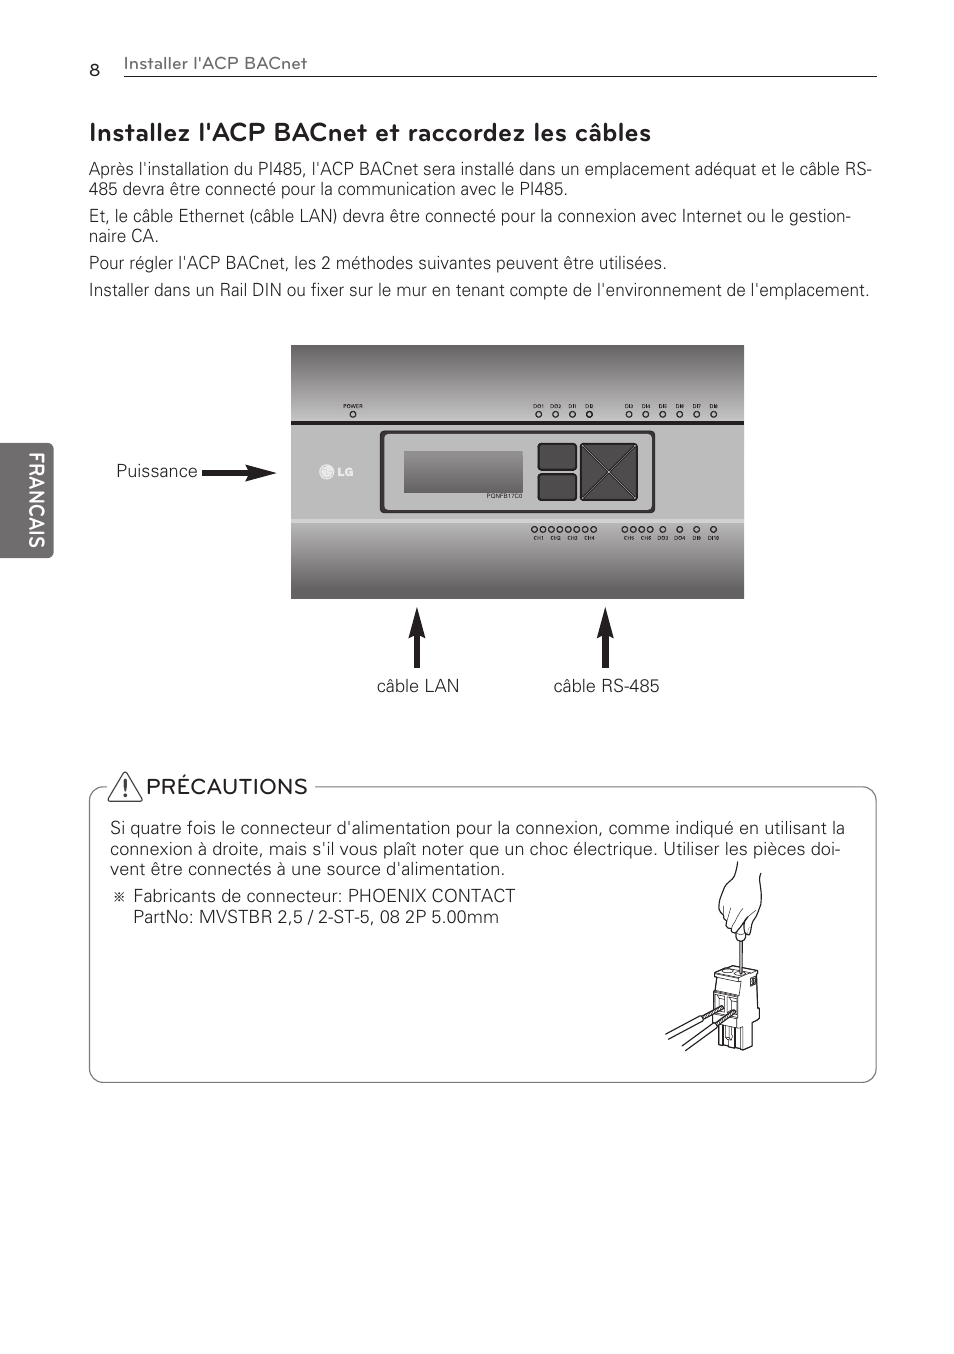 Installez l'acp bacnet et raccordez les câbles | LG PQNFB17C0 User Manual | Page 44 / 109